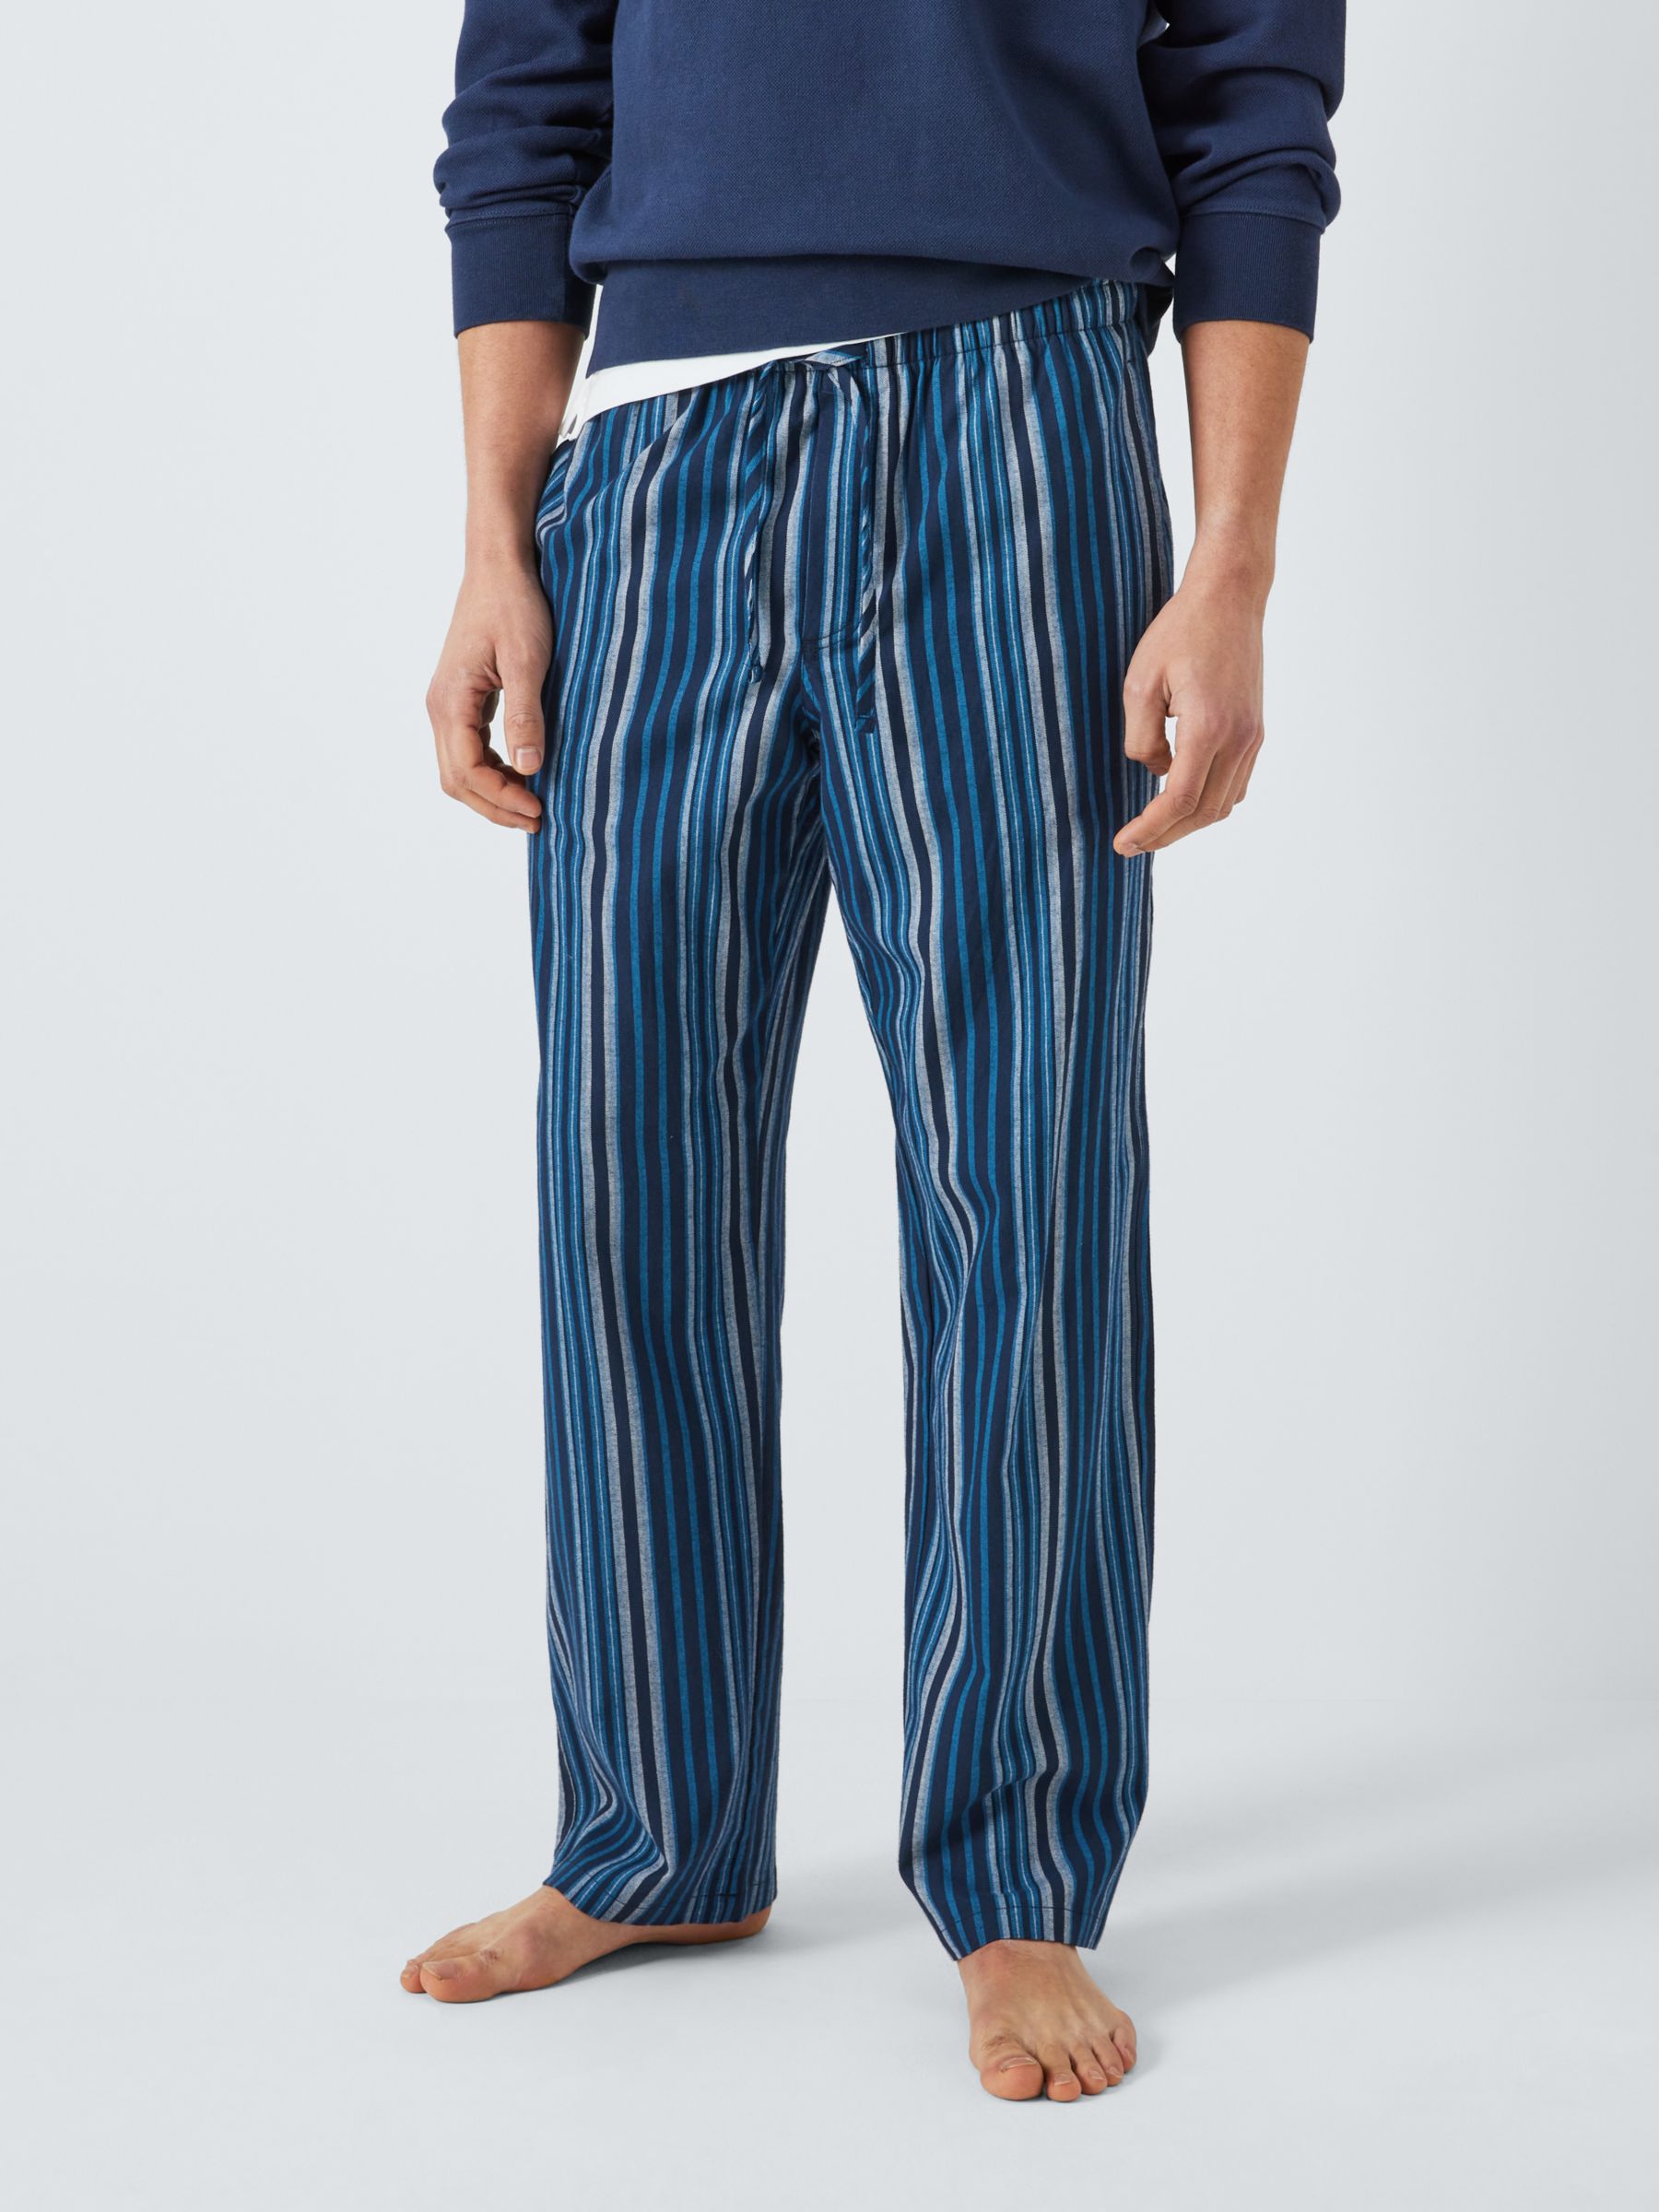 Polo Ralph Lauren Mens Navy Pony Print Pajama Pants 4Xl Brand New